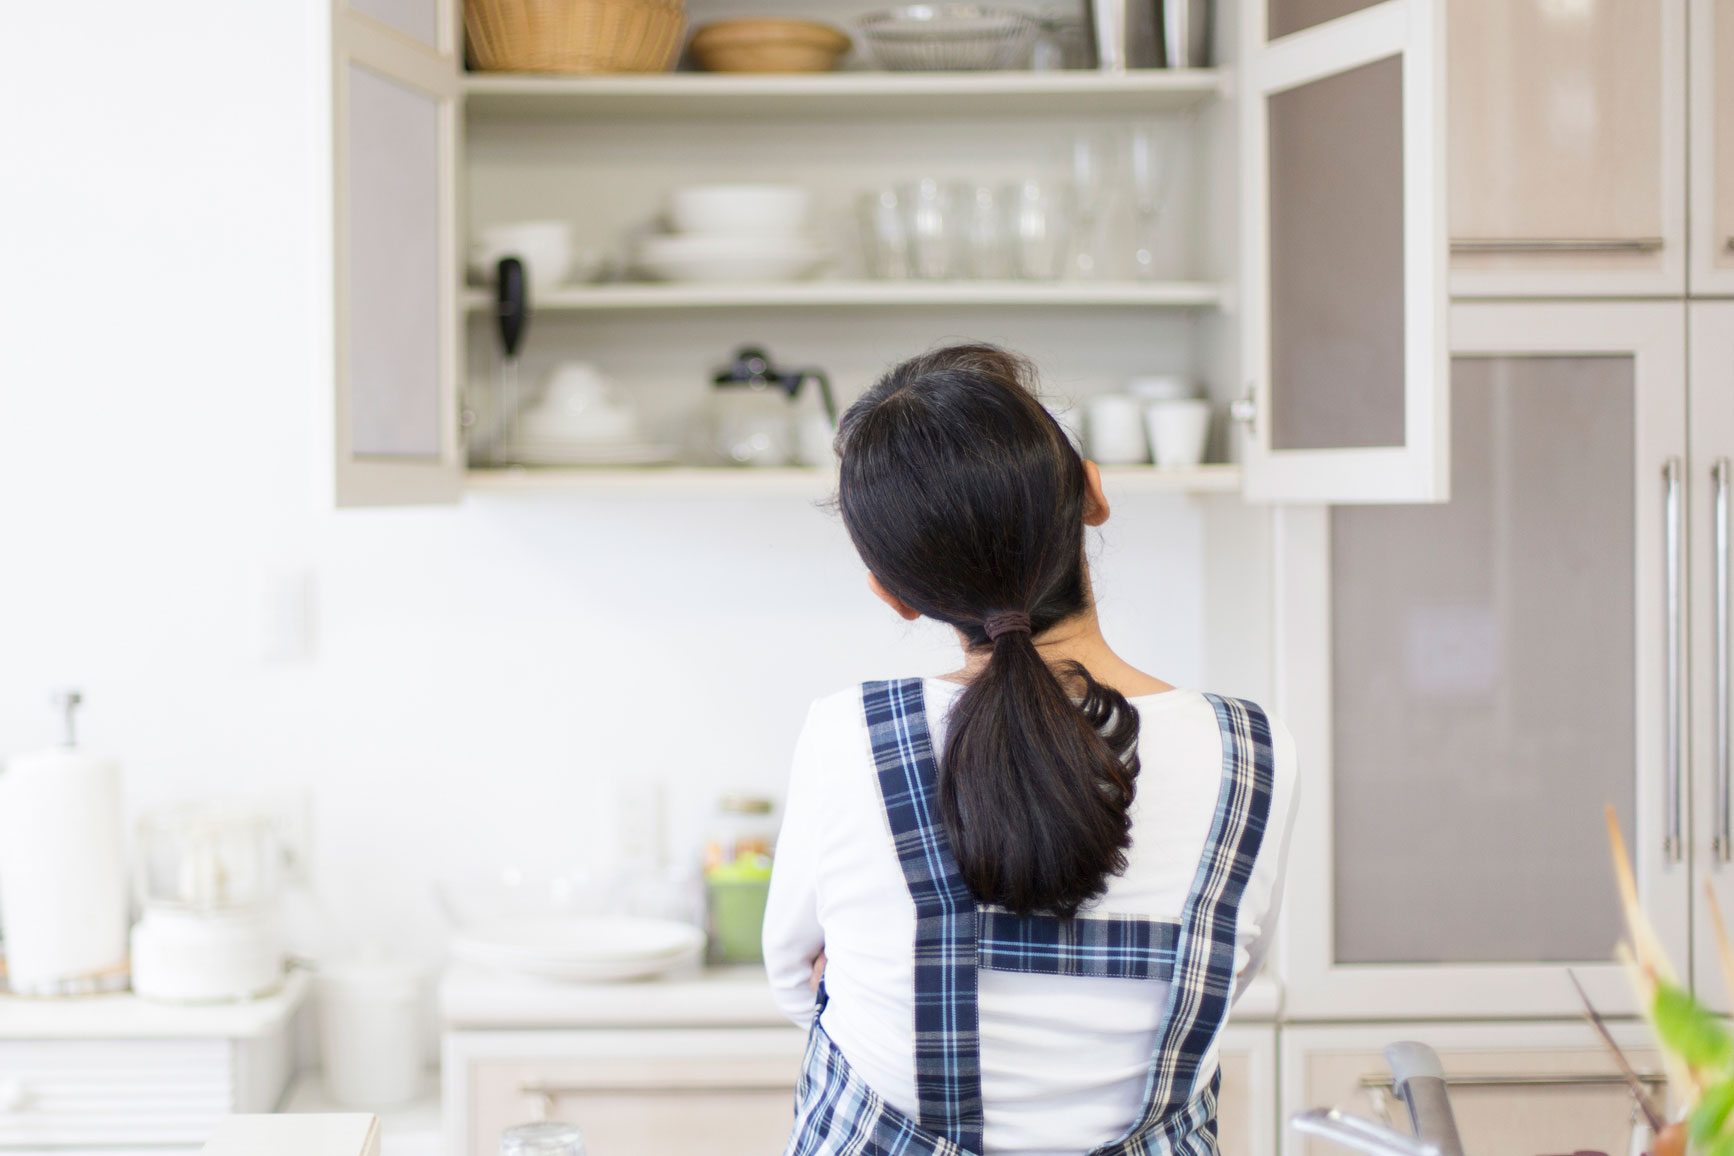 4 Kitchen Cabinet Organization Ideas, According to Experts